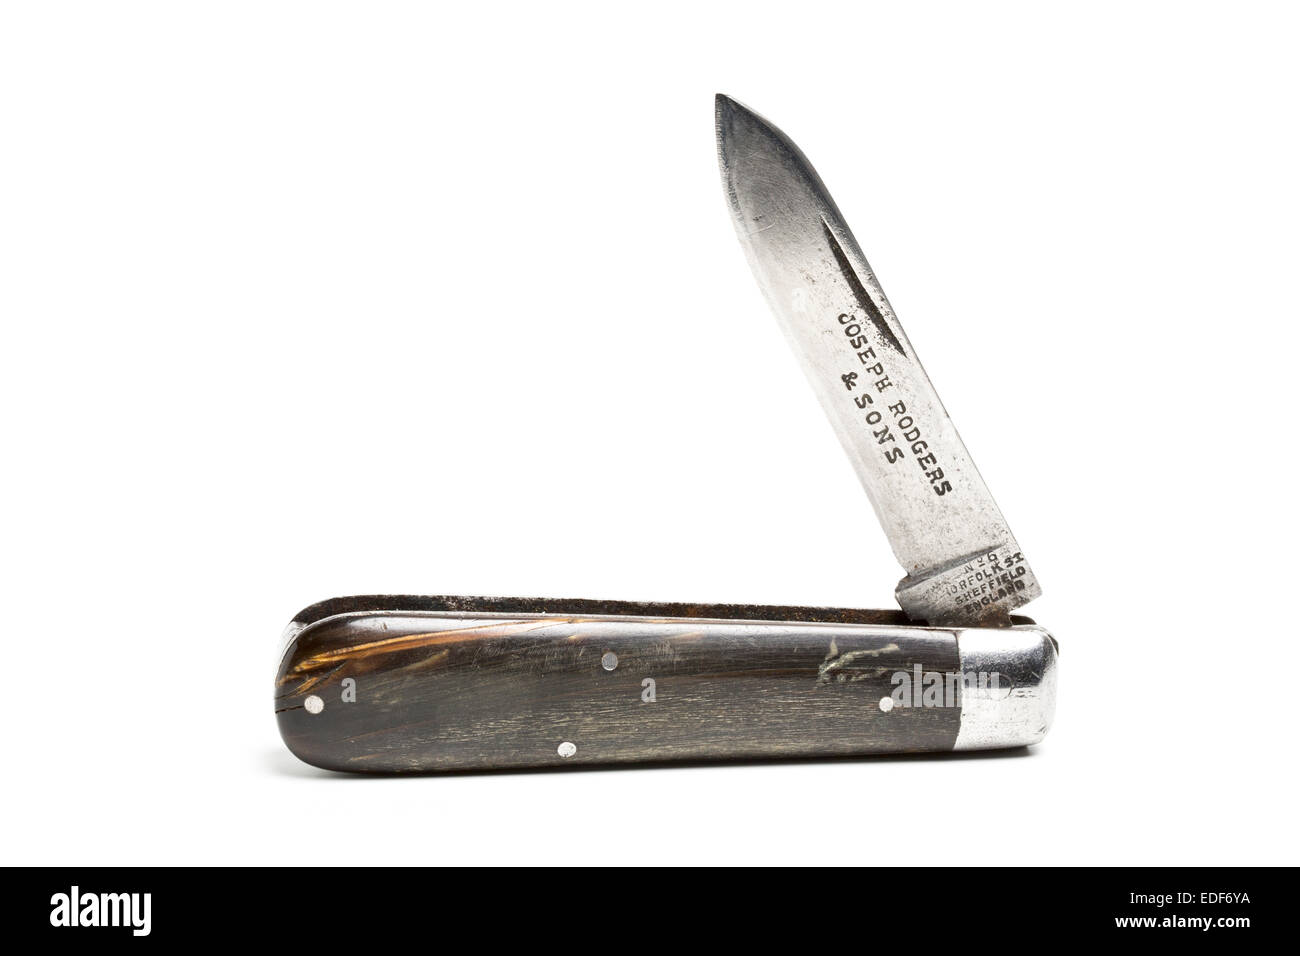 https://c8.alamy.com/comp/EDF6YA/pen-knife-made-by-joseph-rodgers-of-sheffield-with-buffalo-horn-handles-EDF6YA.jpg